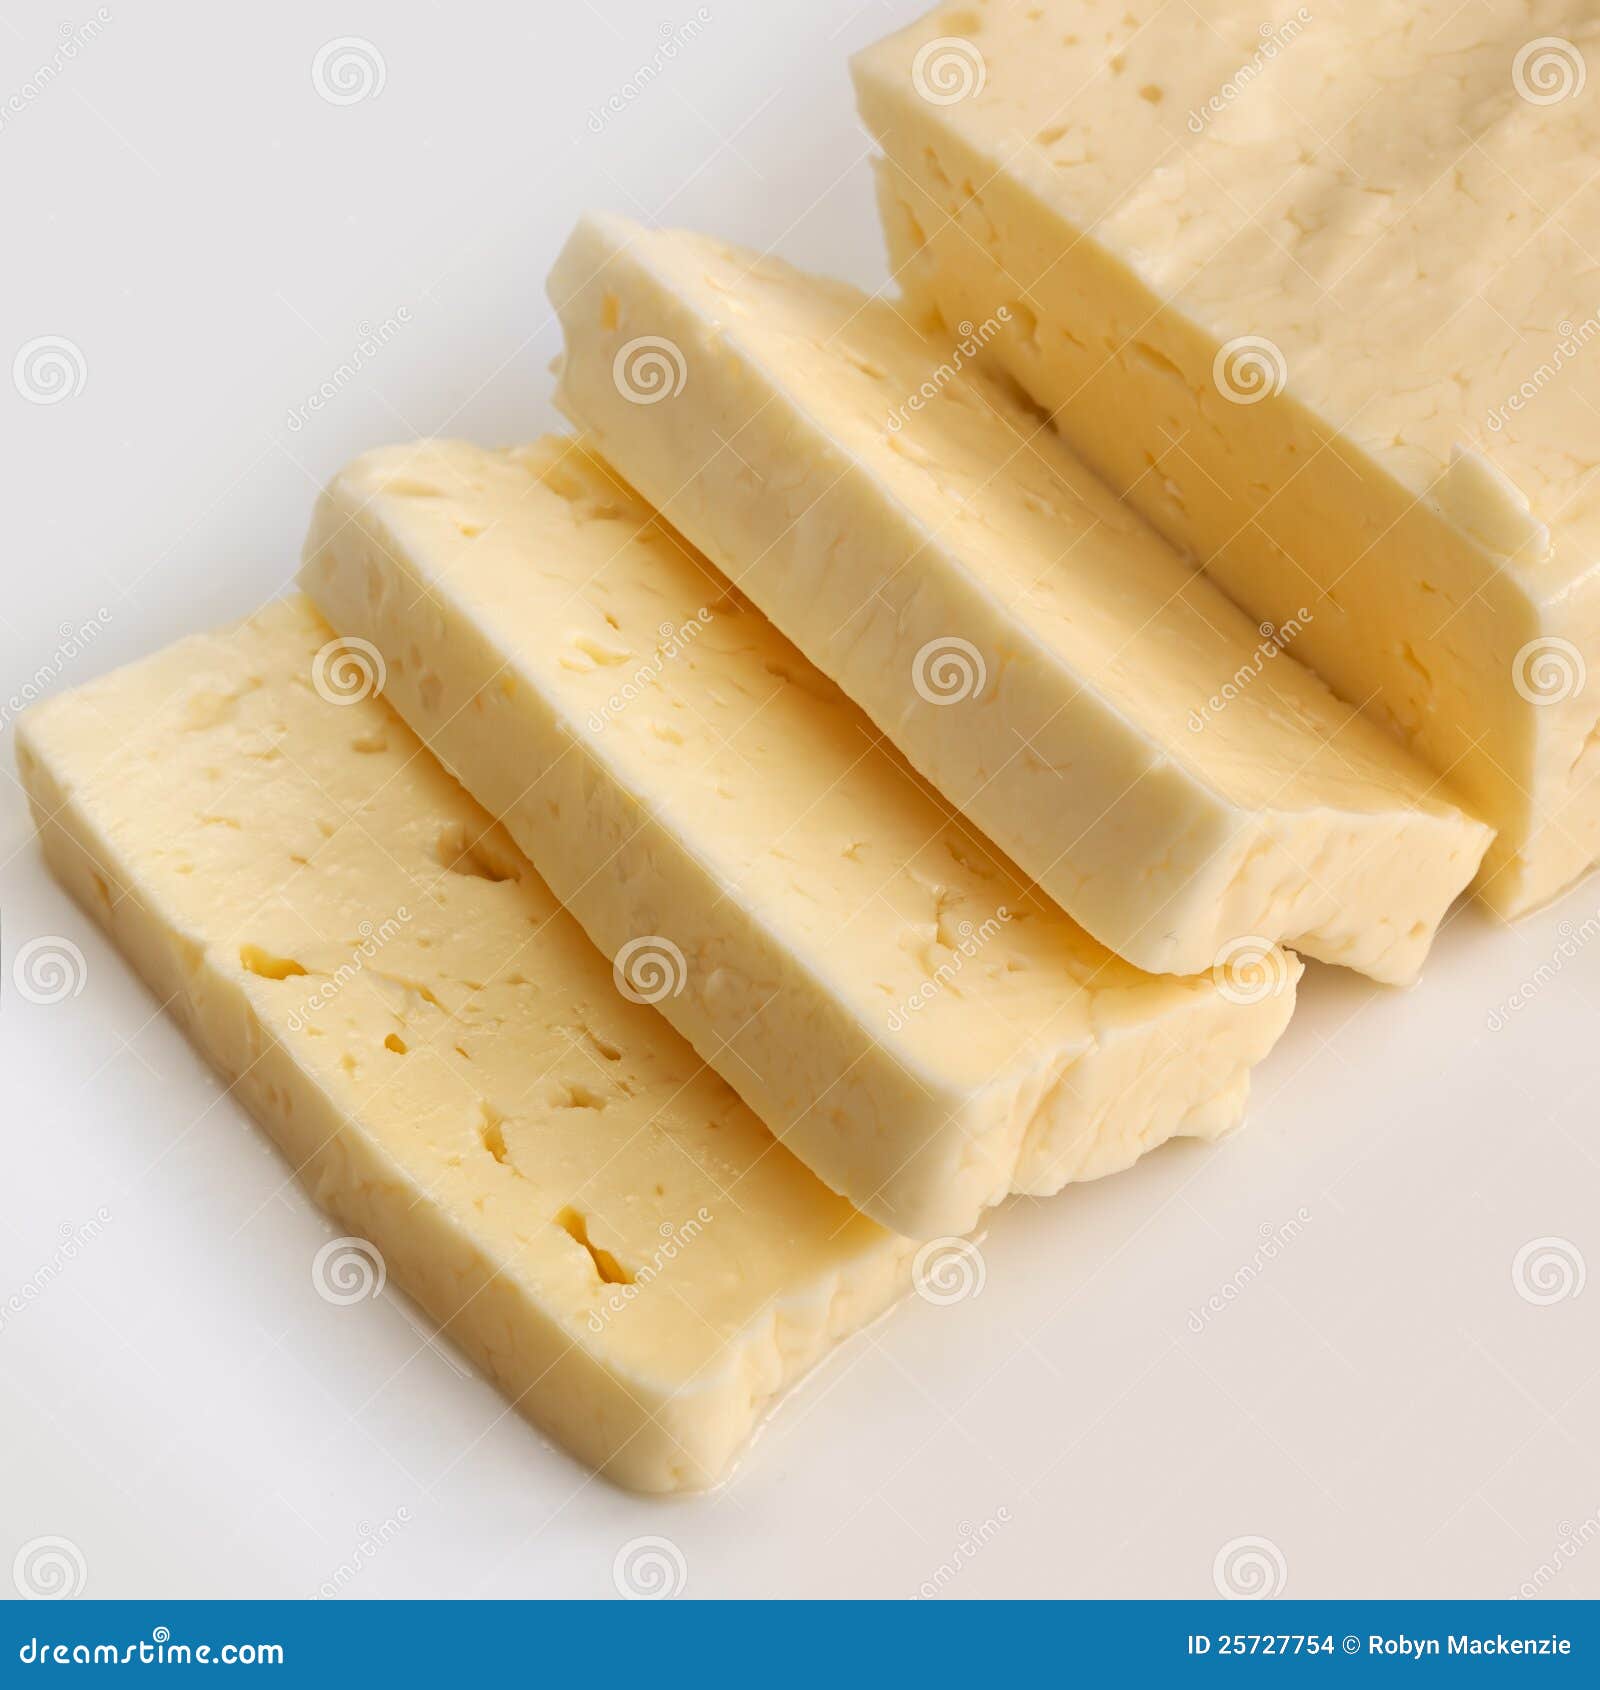 halloumi cheese over white